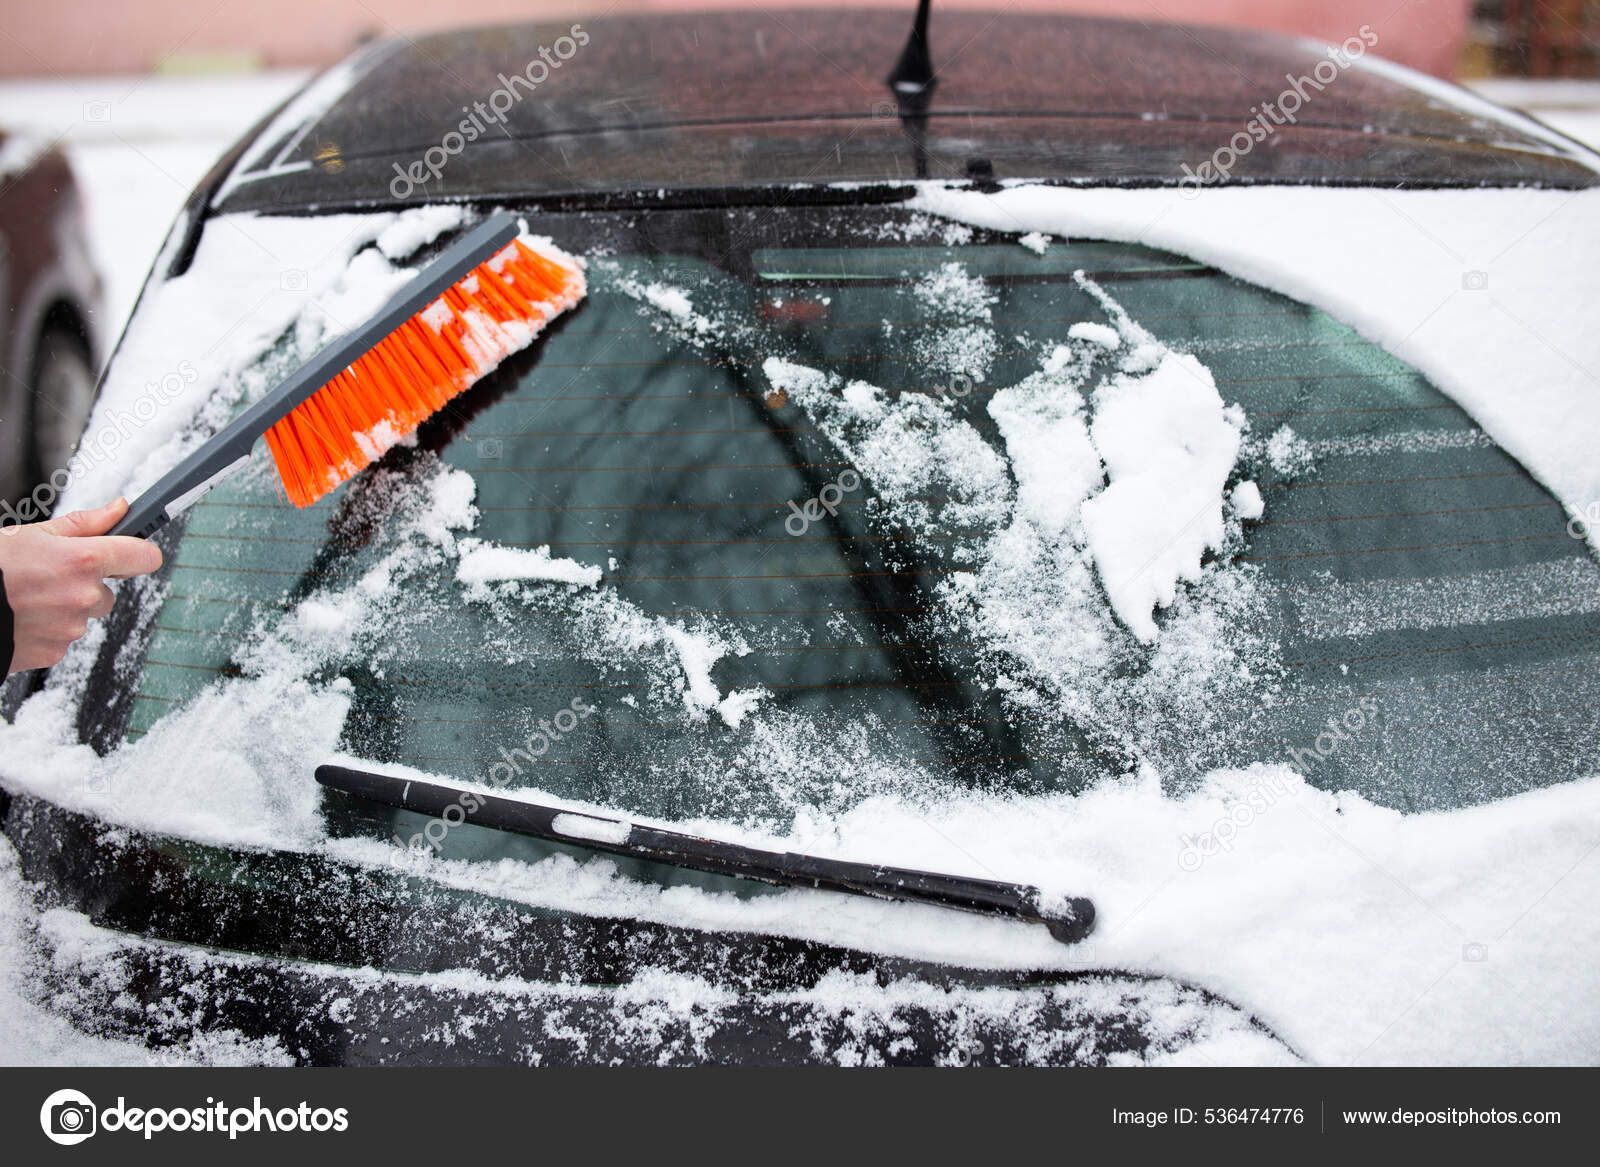 https://st.depositphotos.com/30115080/53647/i/1600/depositphotos_536474776-stock-photo-winter-problems-with-the-car.jpg